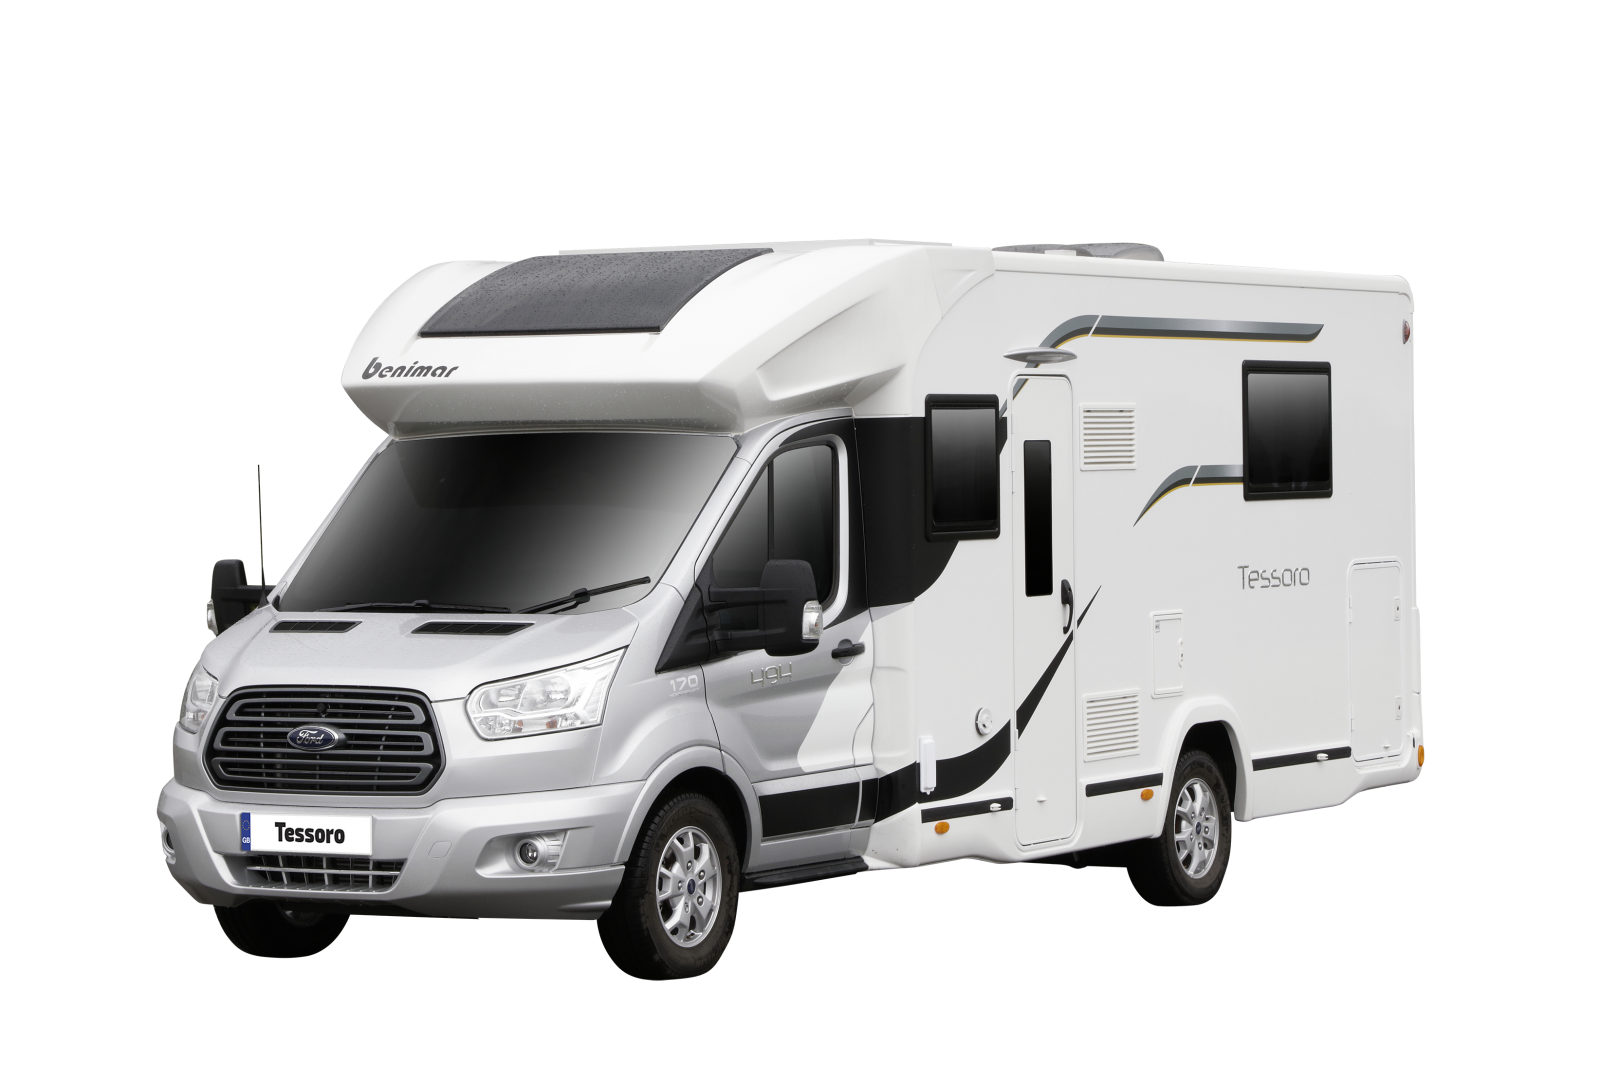 kisspng-caravan-campervans-vehicle-lincoln-motor-company-5acb374558d777.5835756615232673973639